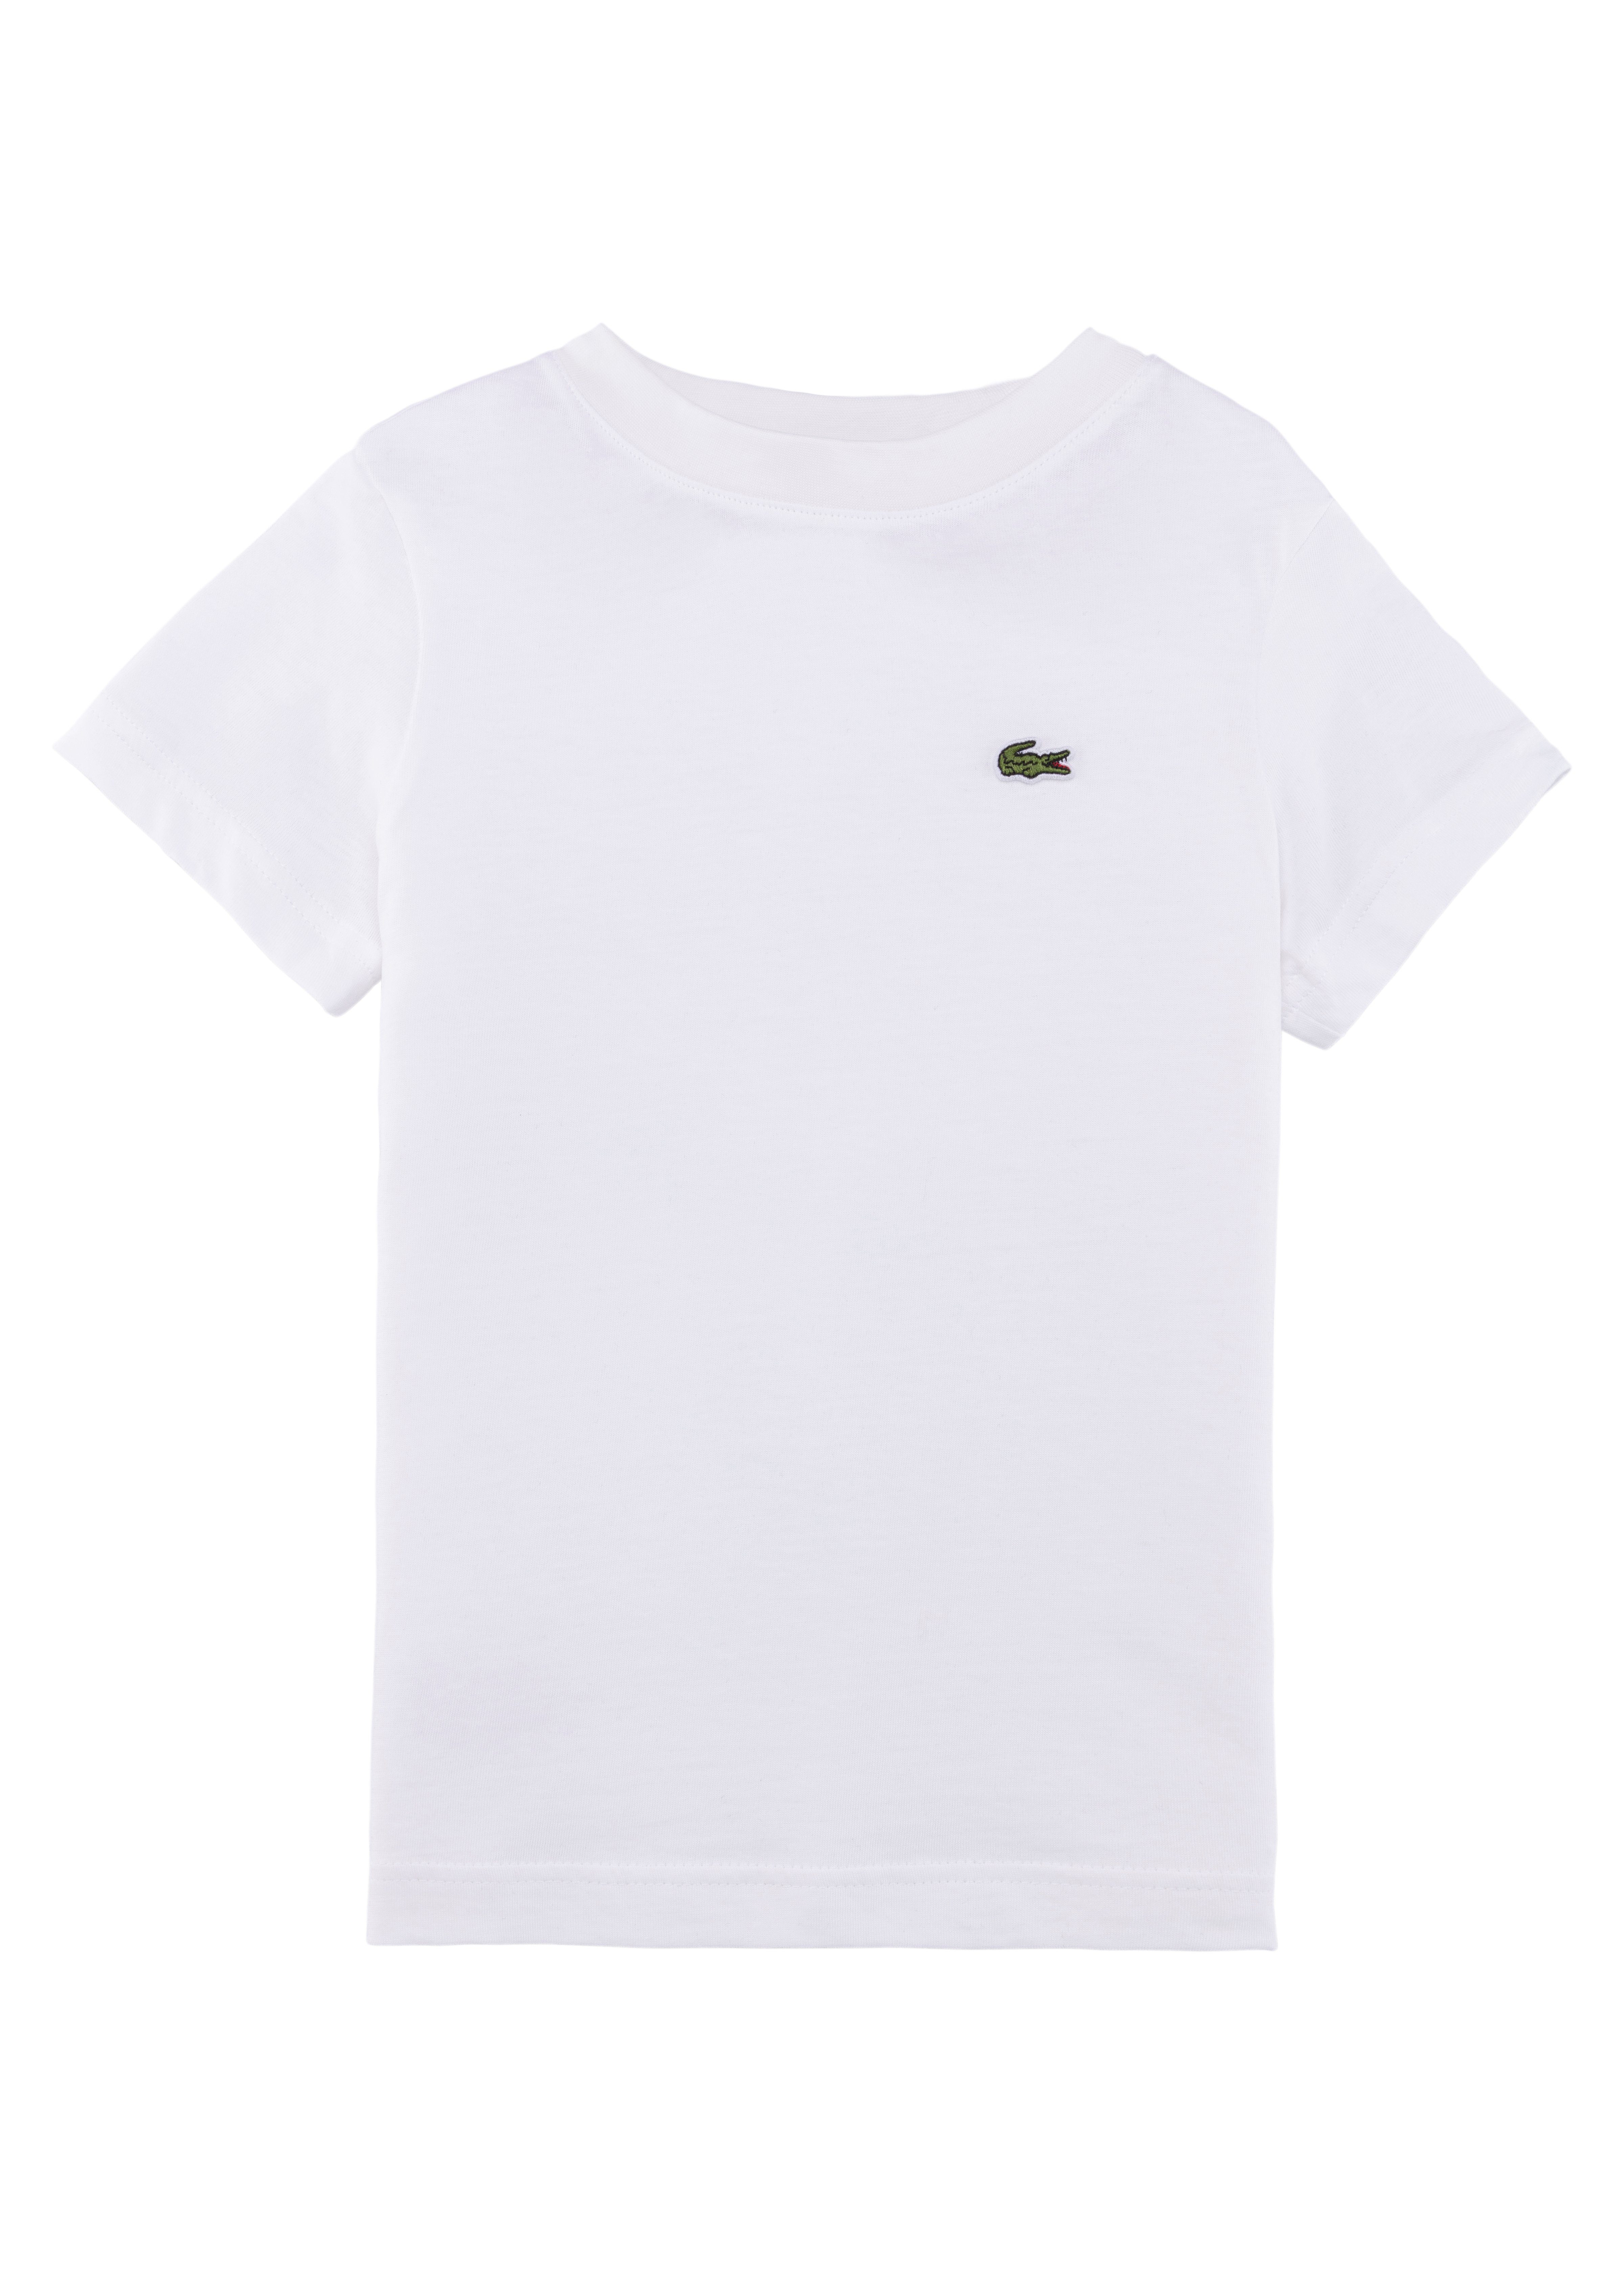 Lacoste T-Shirt mit Lacoste-Krokodil auf Brusthöhe